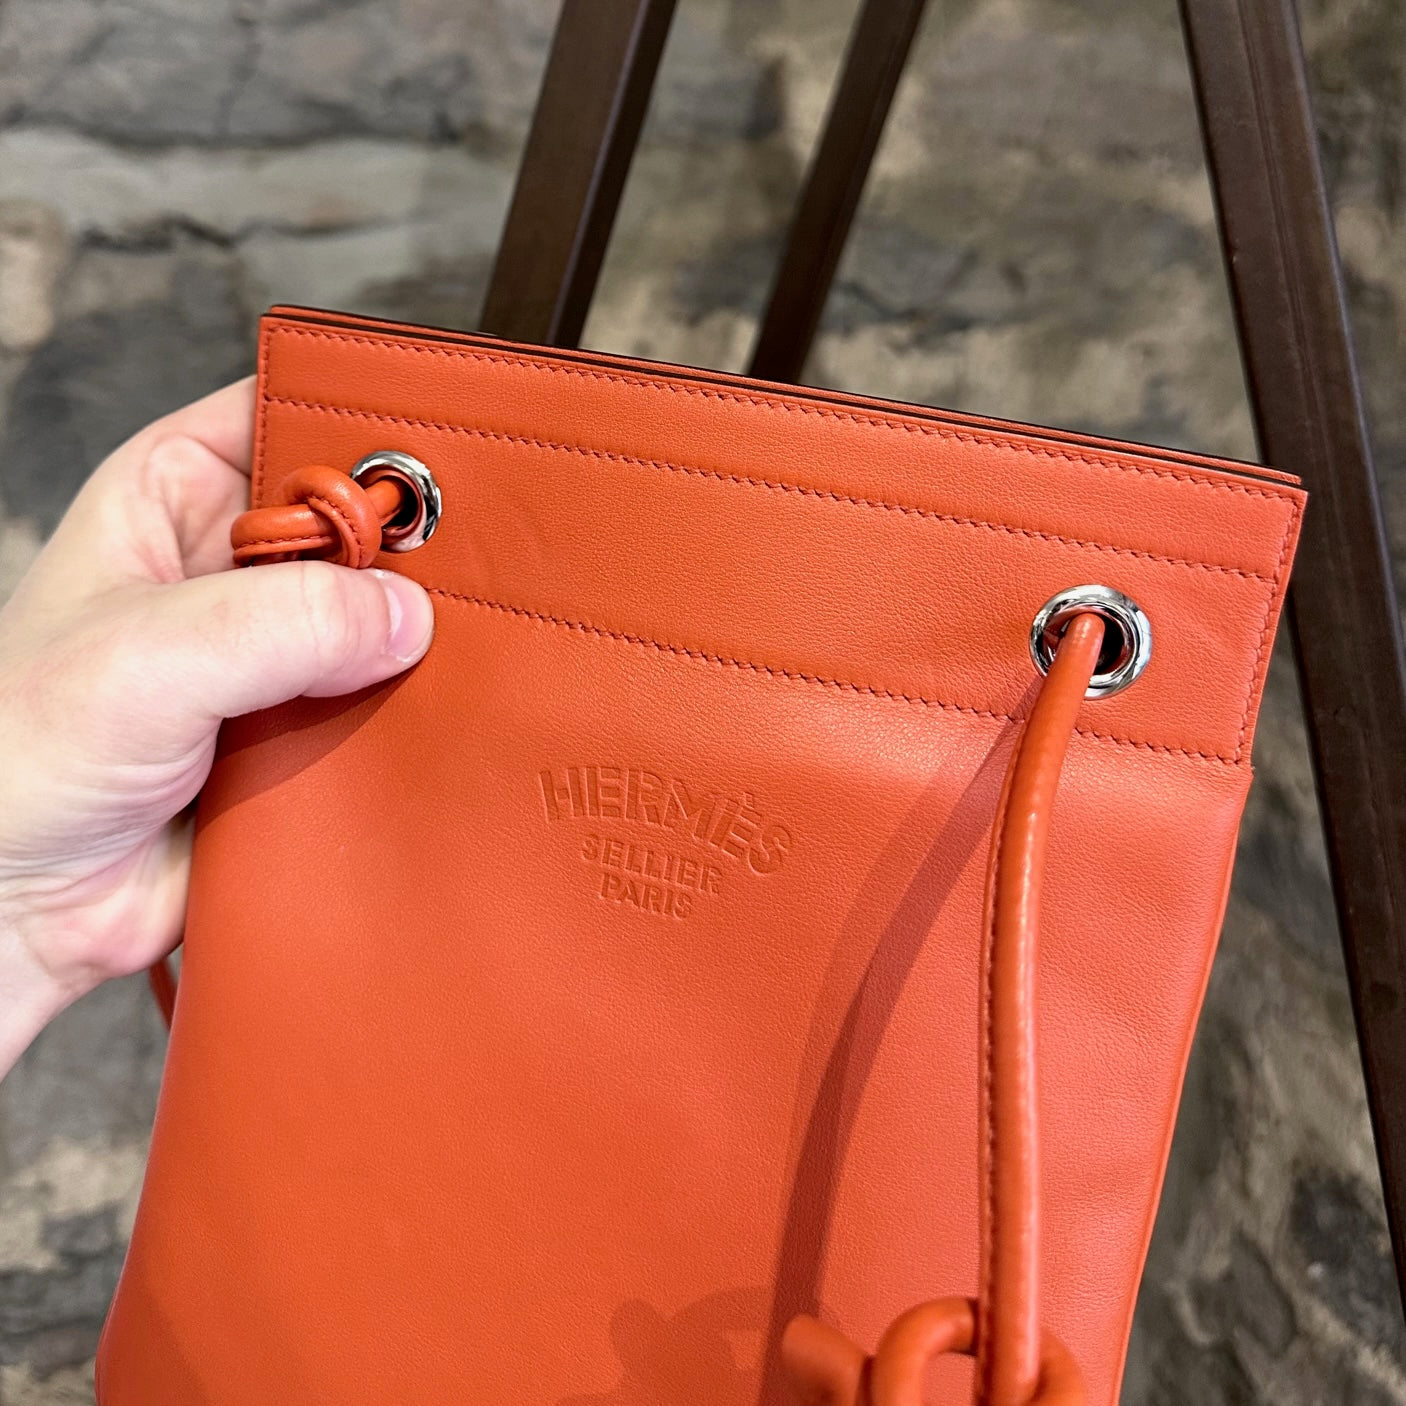 Hermès Aline Burgundy Leather Clutch Bag (Pre-Owned)